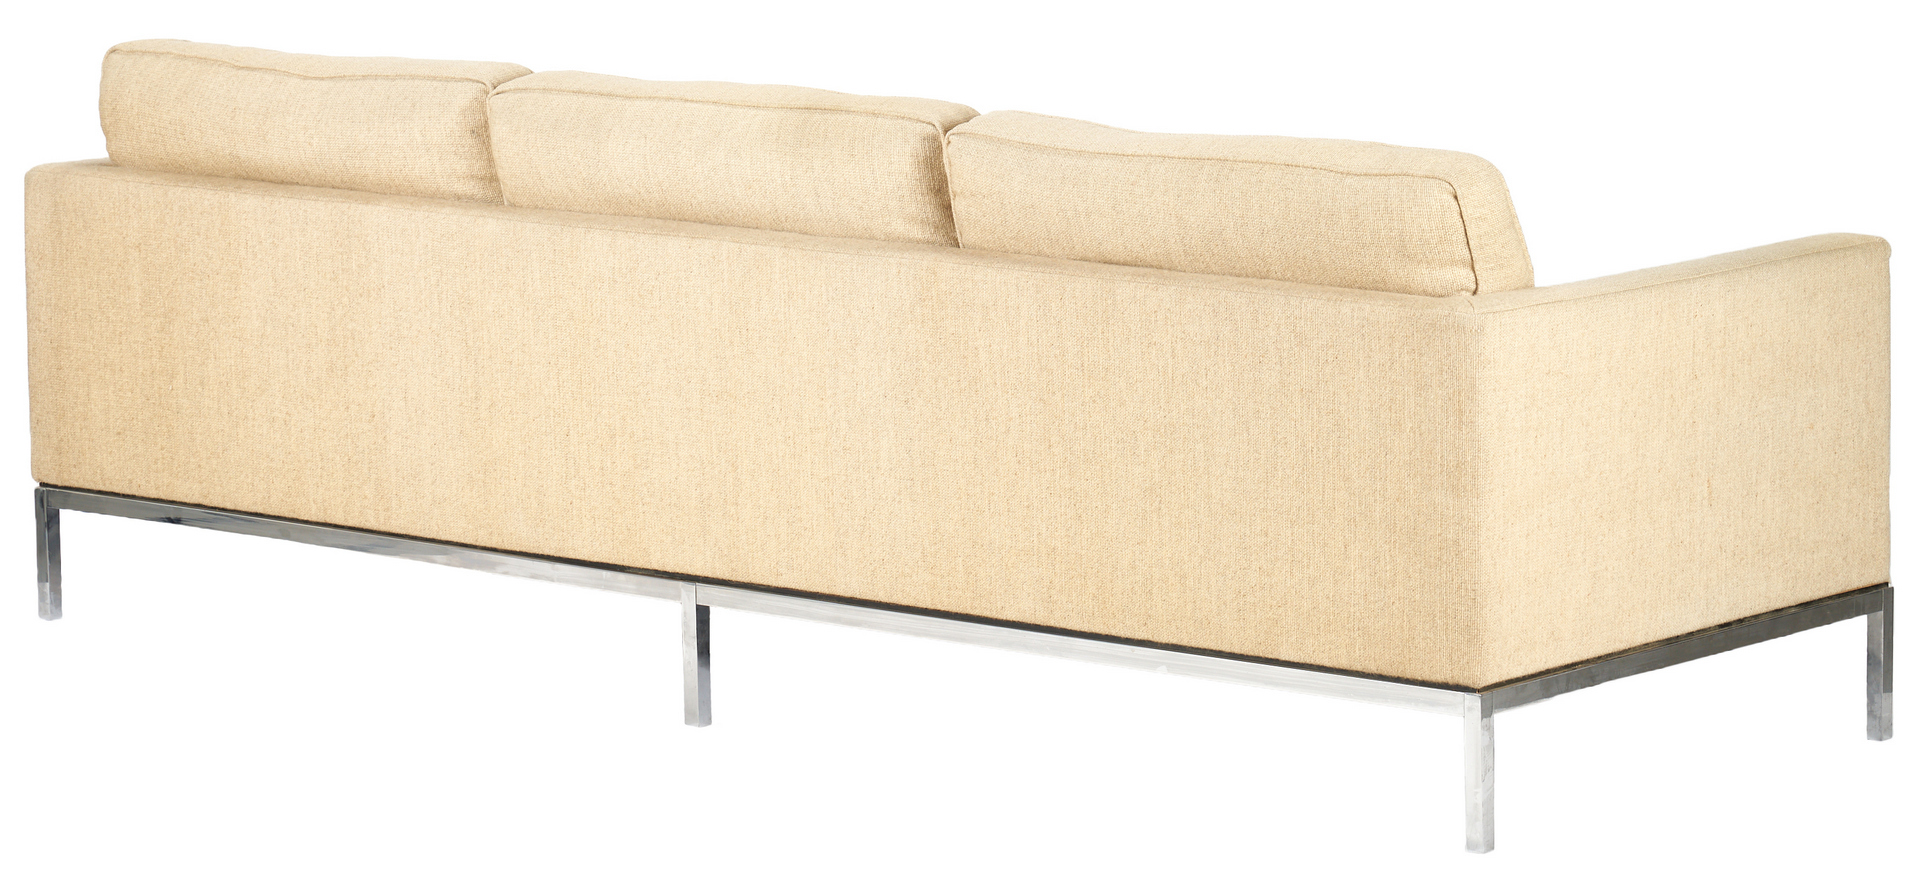 Lot 238: Mid-Century Knoll Parallel Bar System Sofa